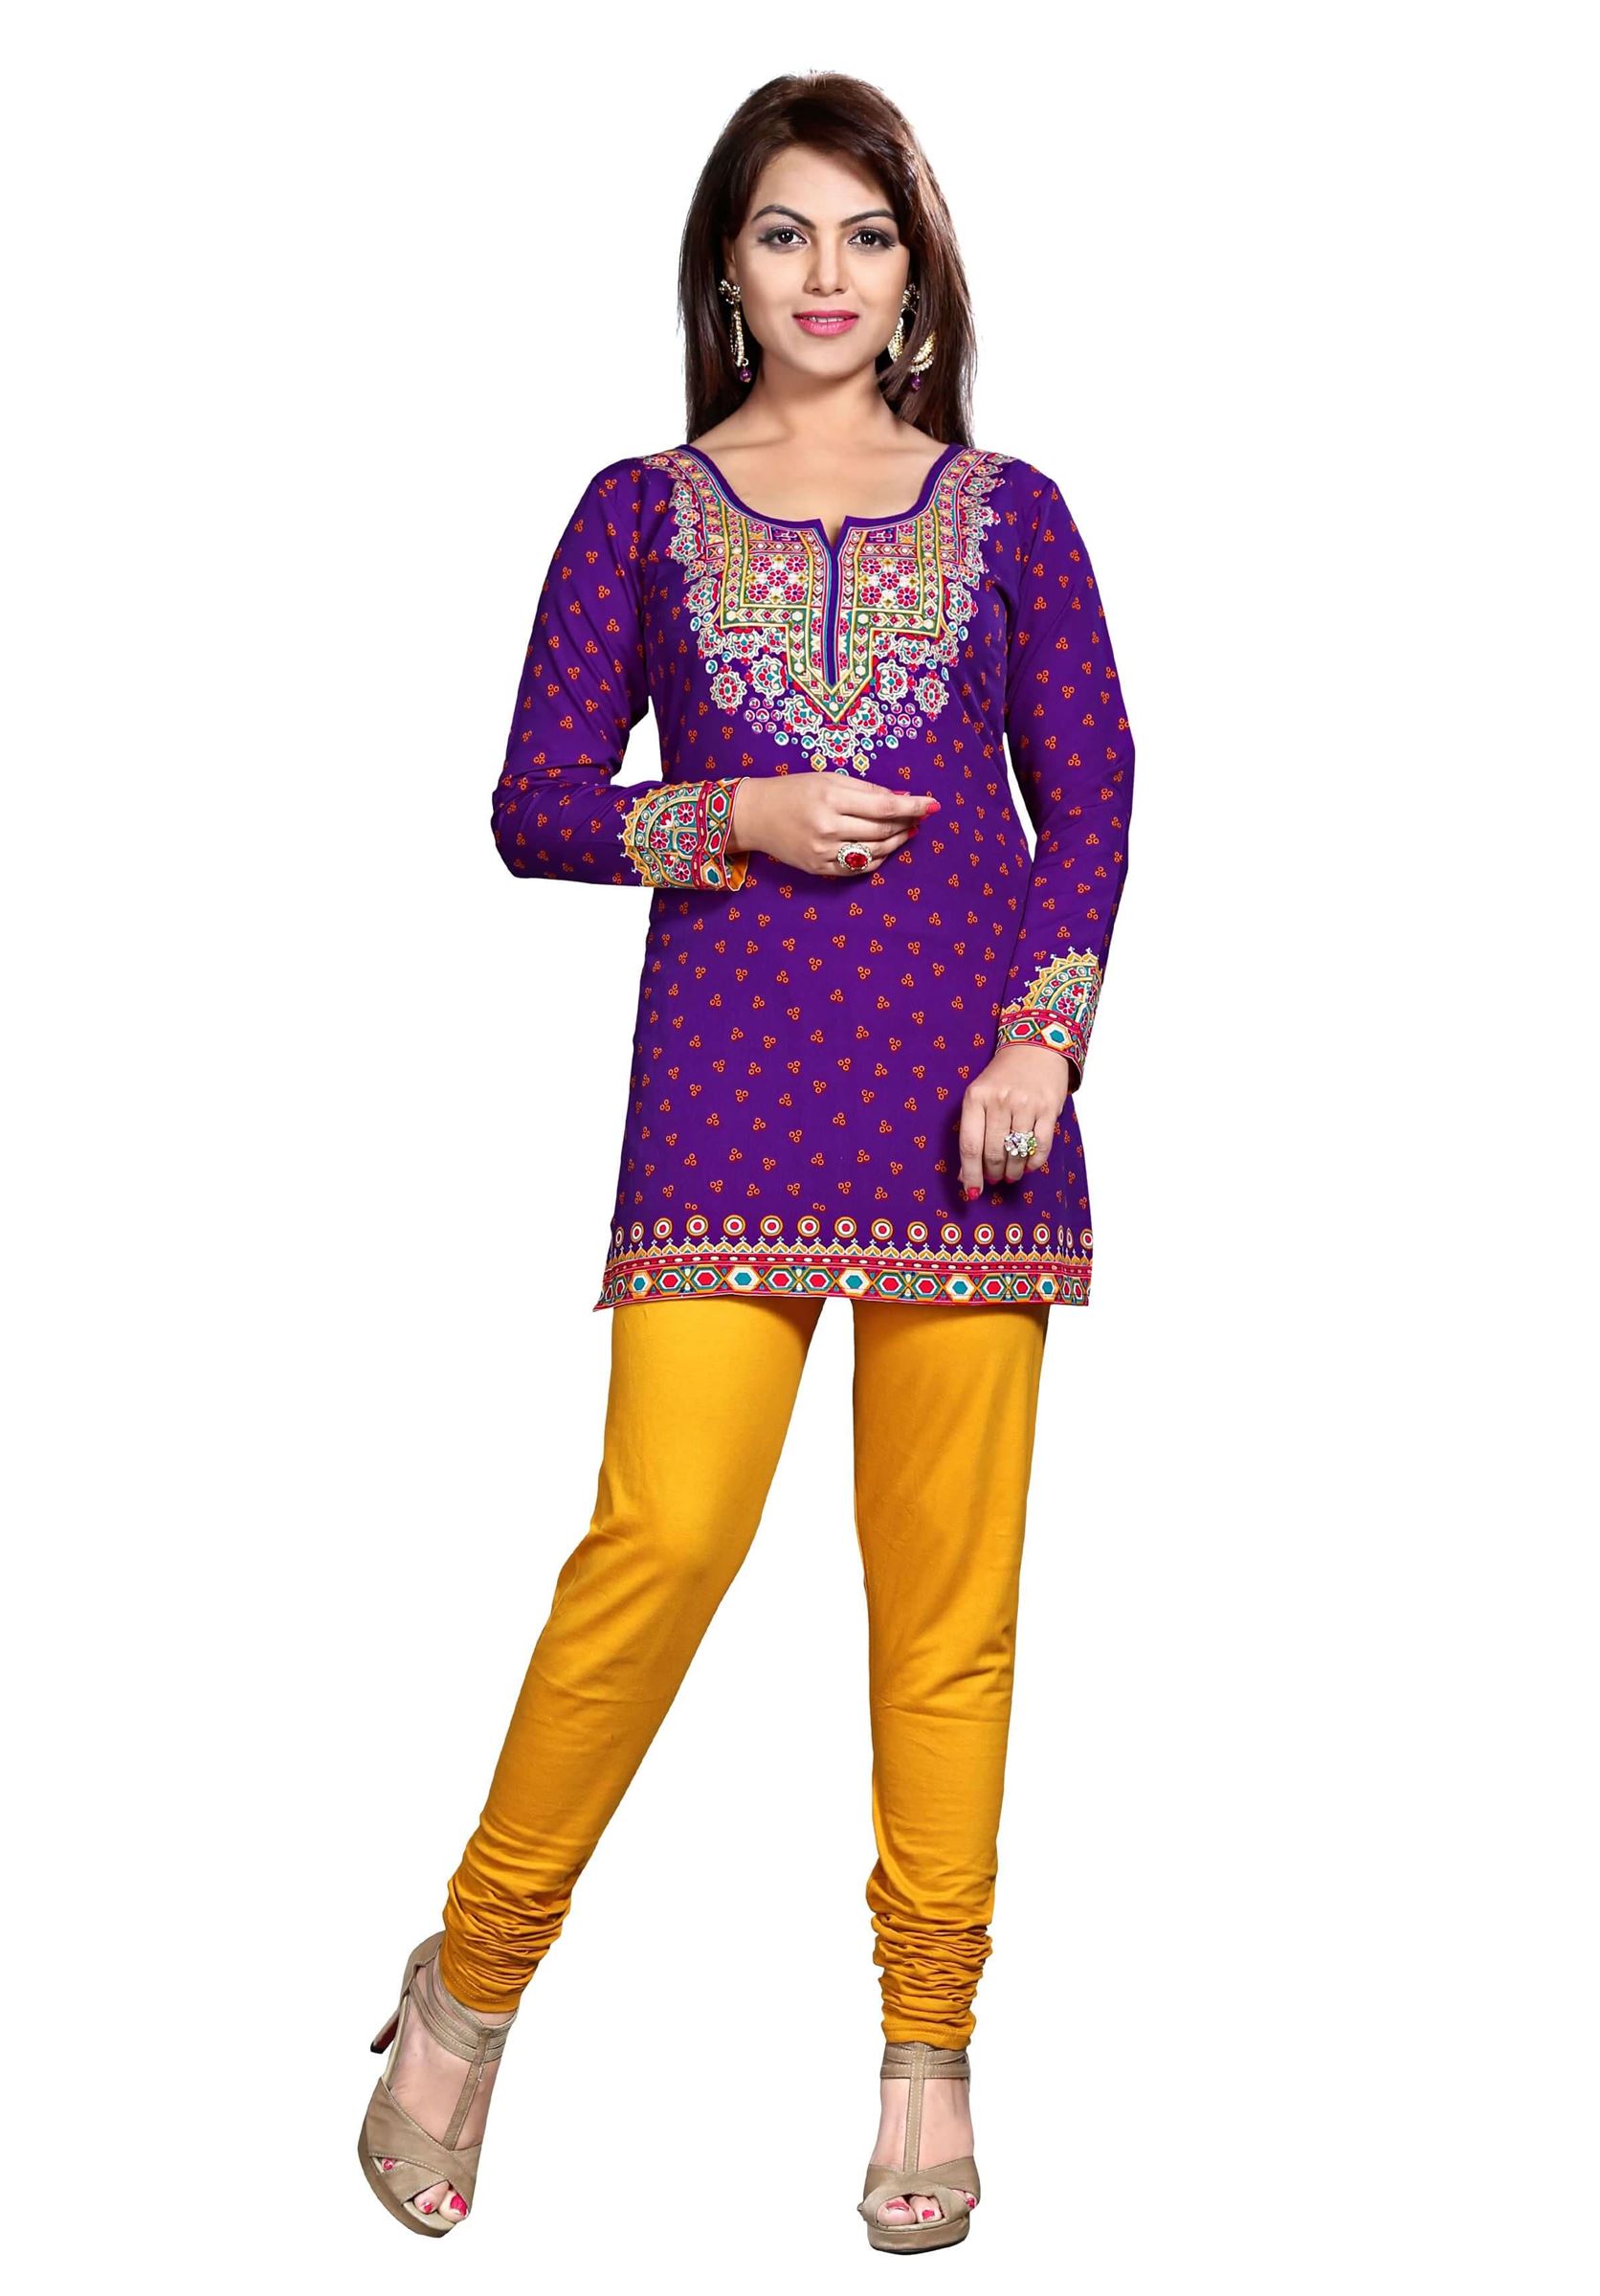 Buy Printes short kurtas at INR 2990 online from Wholesale Textile ...